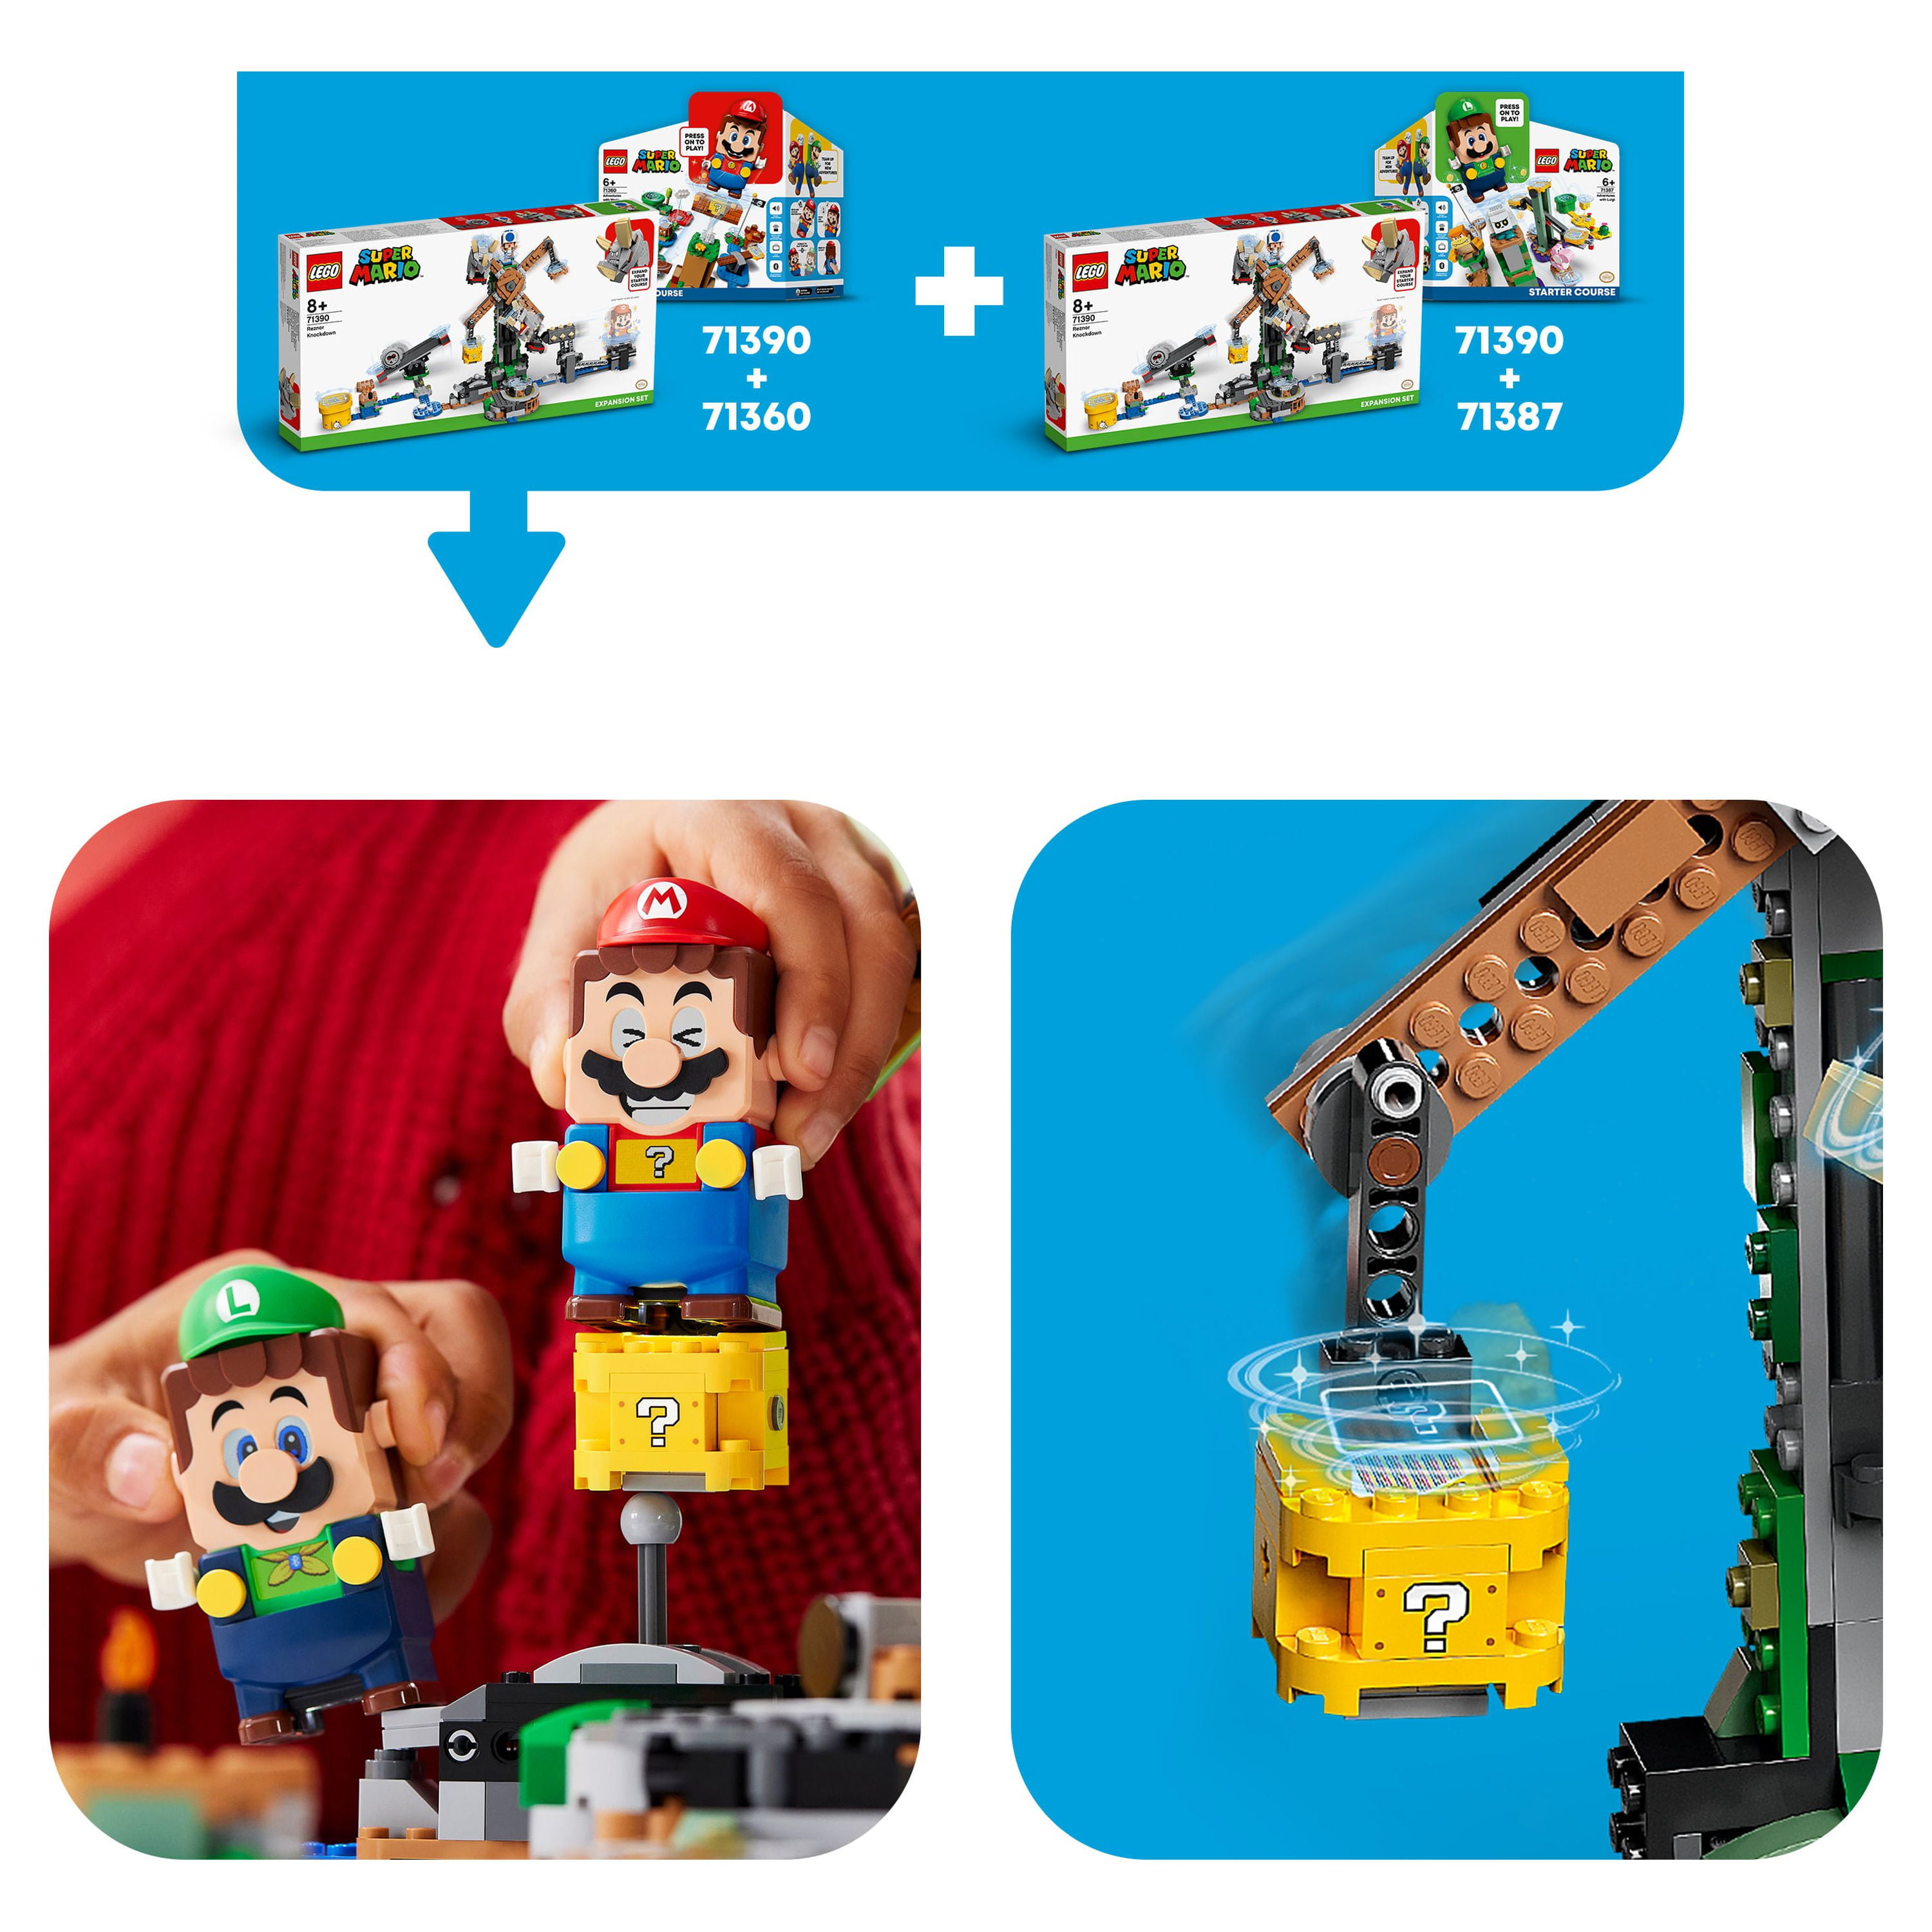 Reznor Knockdown Expansion Set 71390 | LEGO® Super Mario™ | Buy online at  the Official LEGO® Shop US